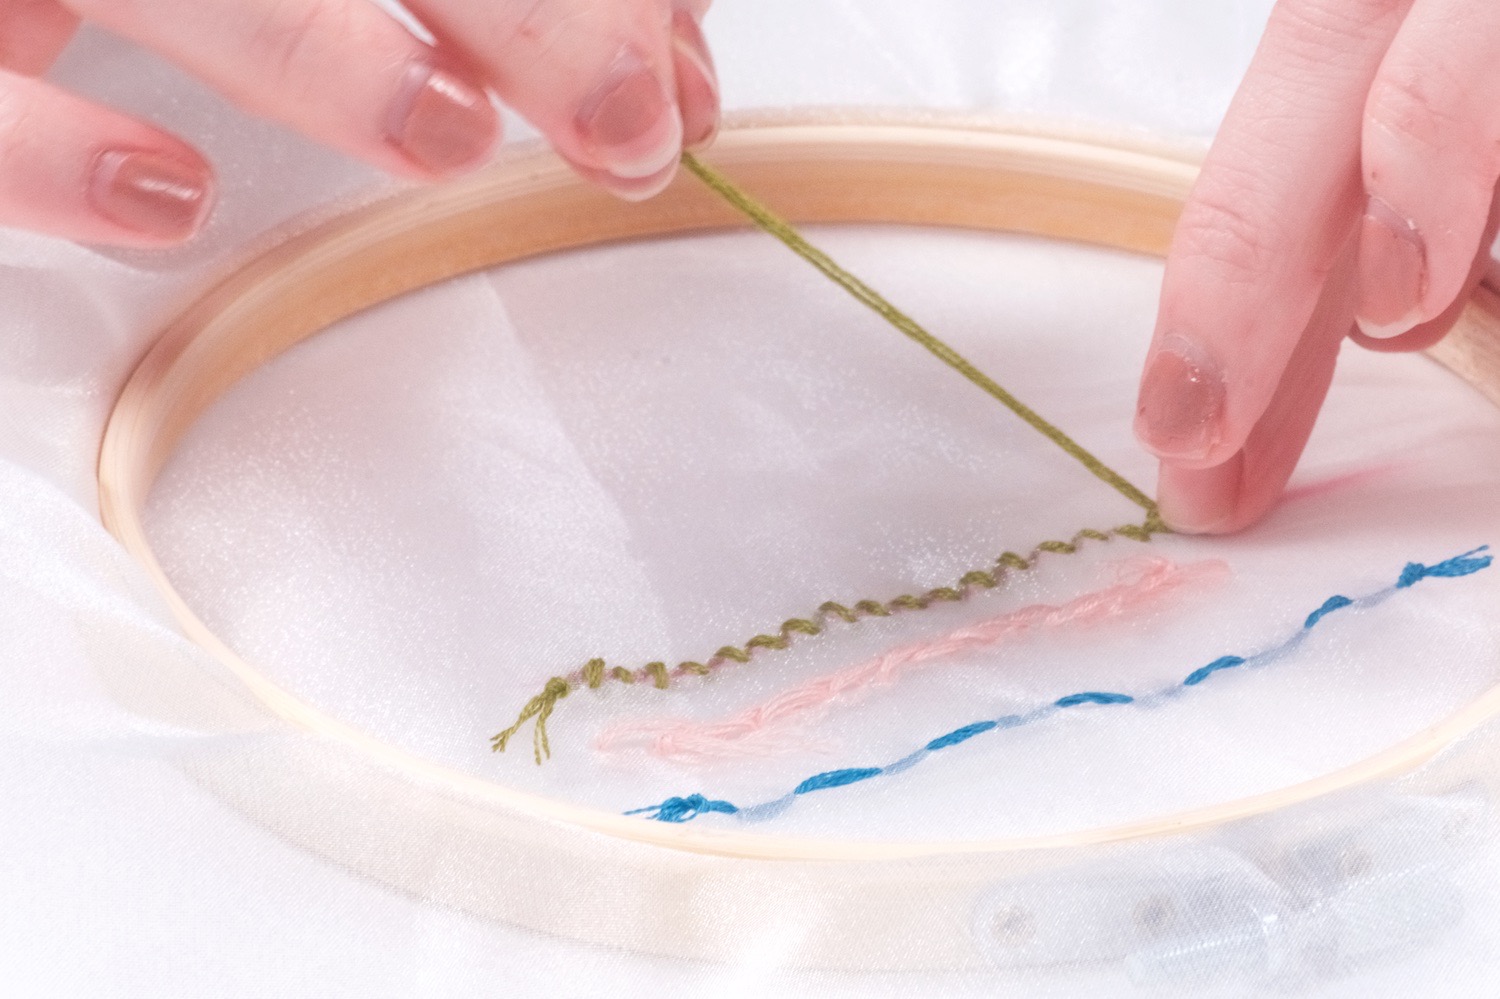 embroidery stem stitch instructions diy pop shop america